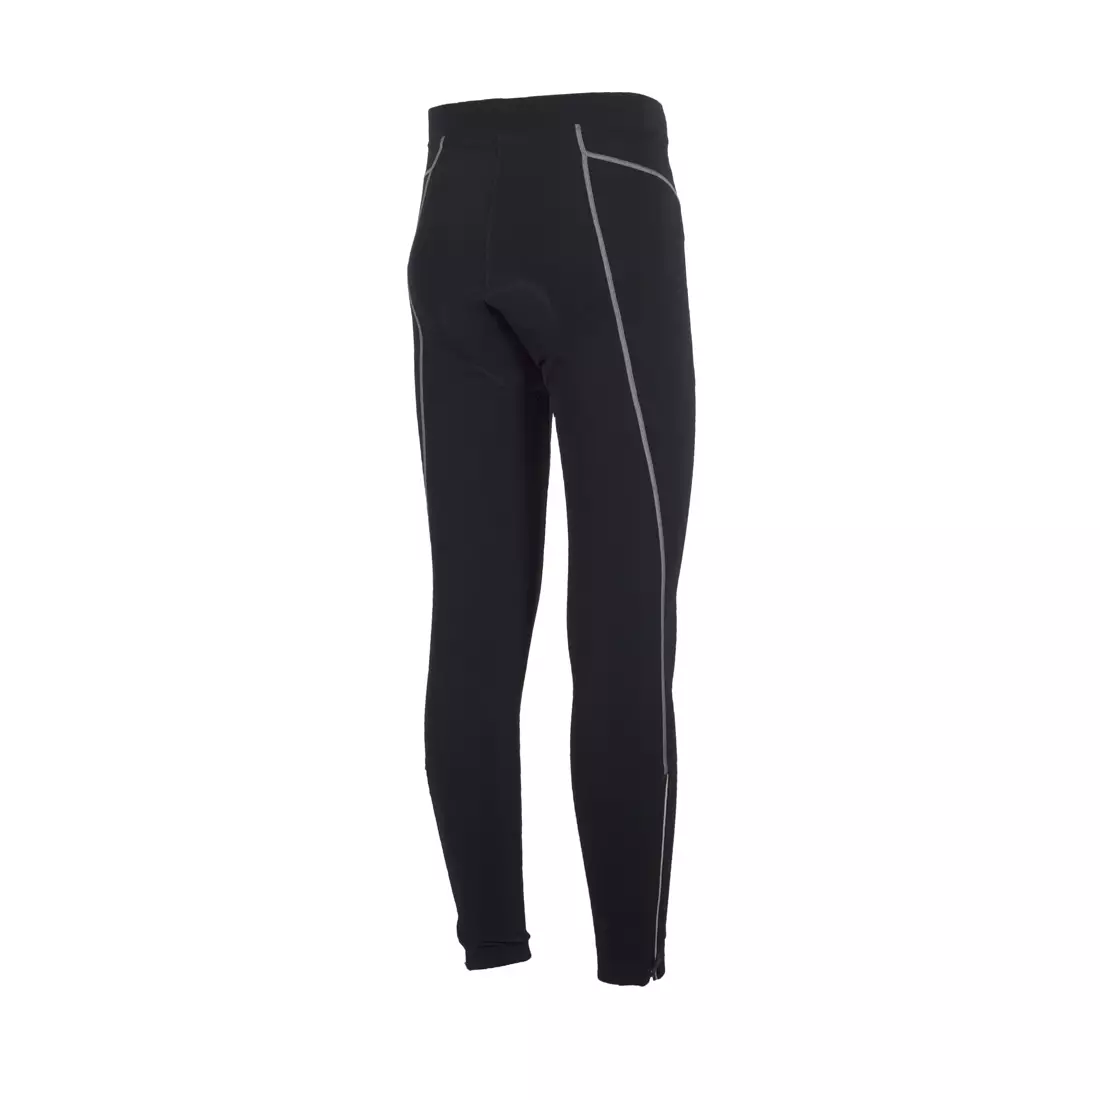 ROGELLI men's insulated cycling pants BARI, GEL, black 002.306